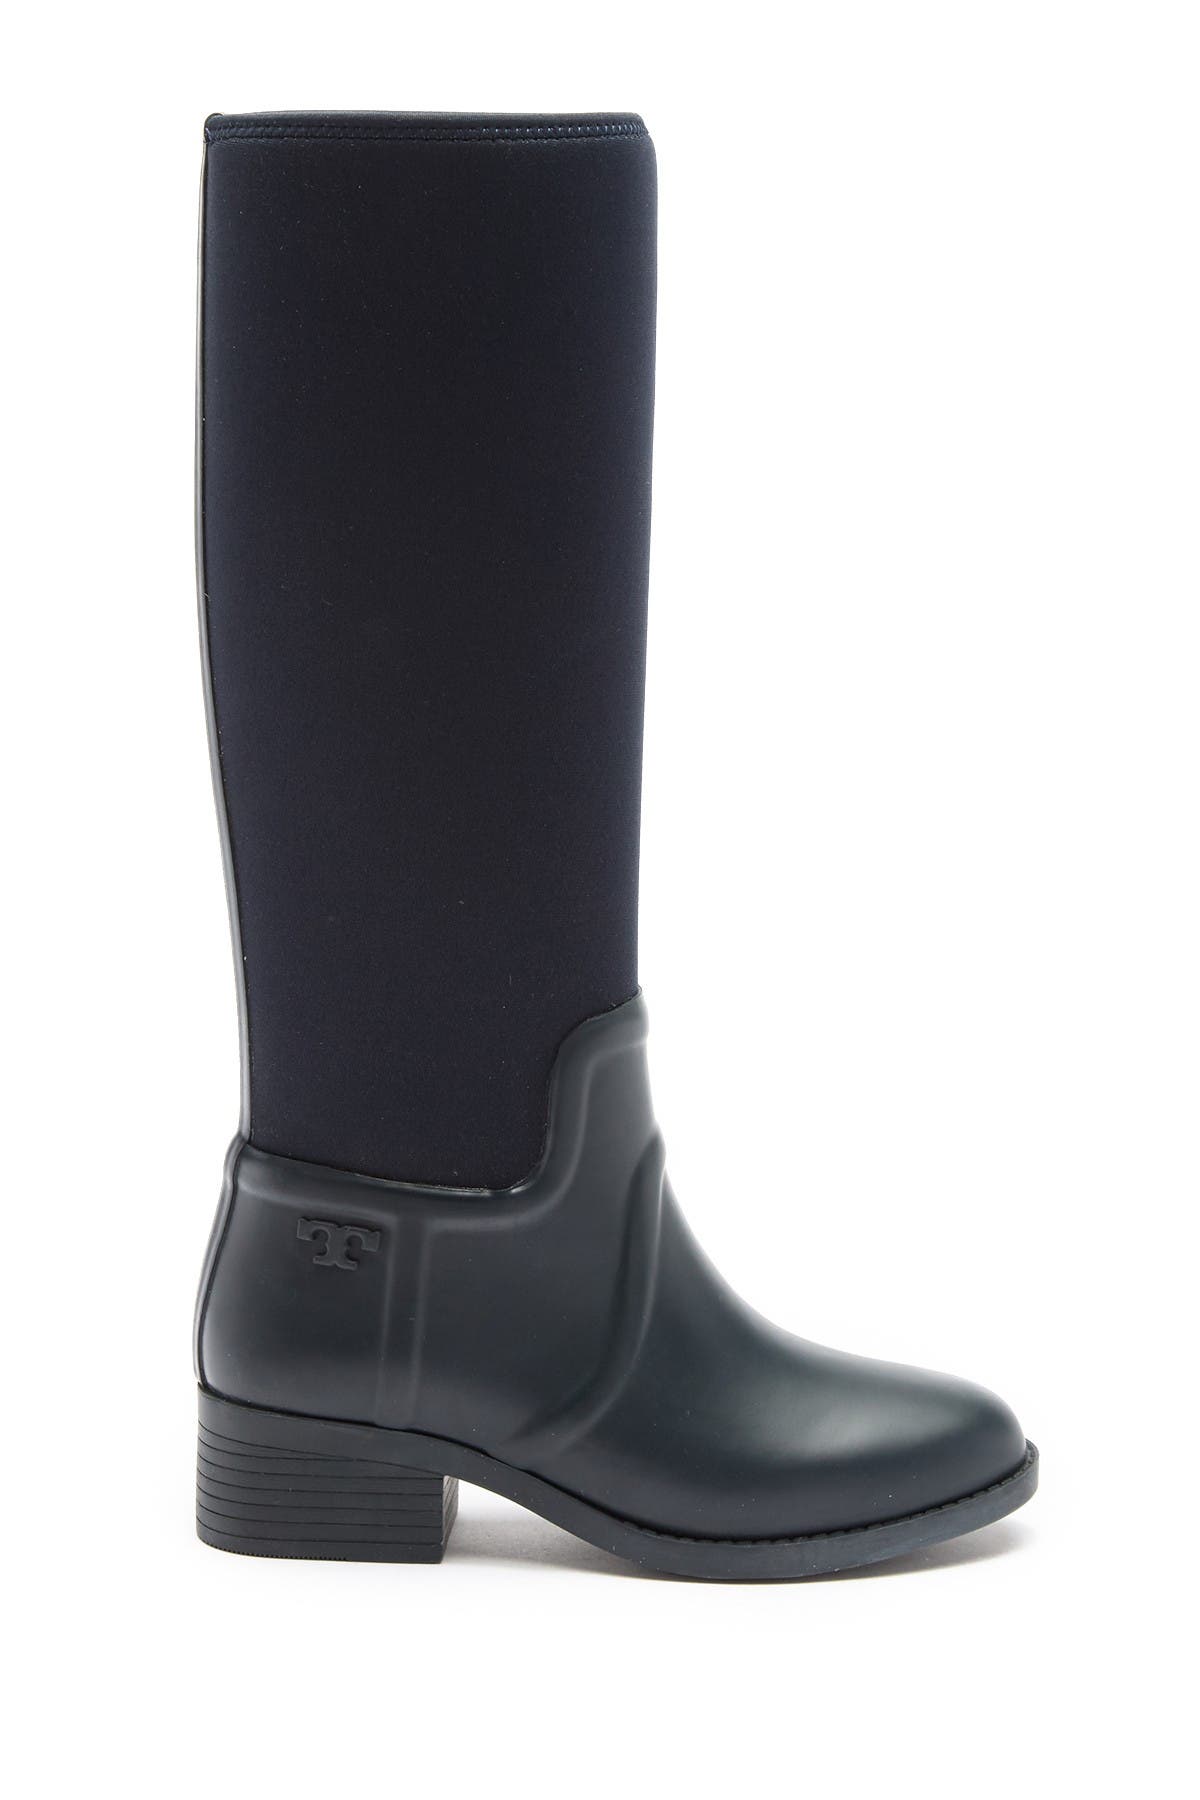 tory burch rain boots size 8